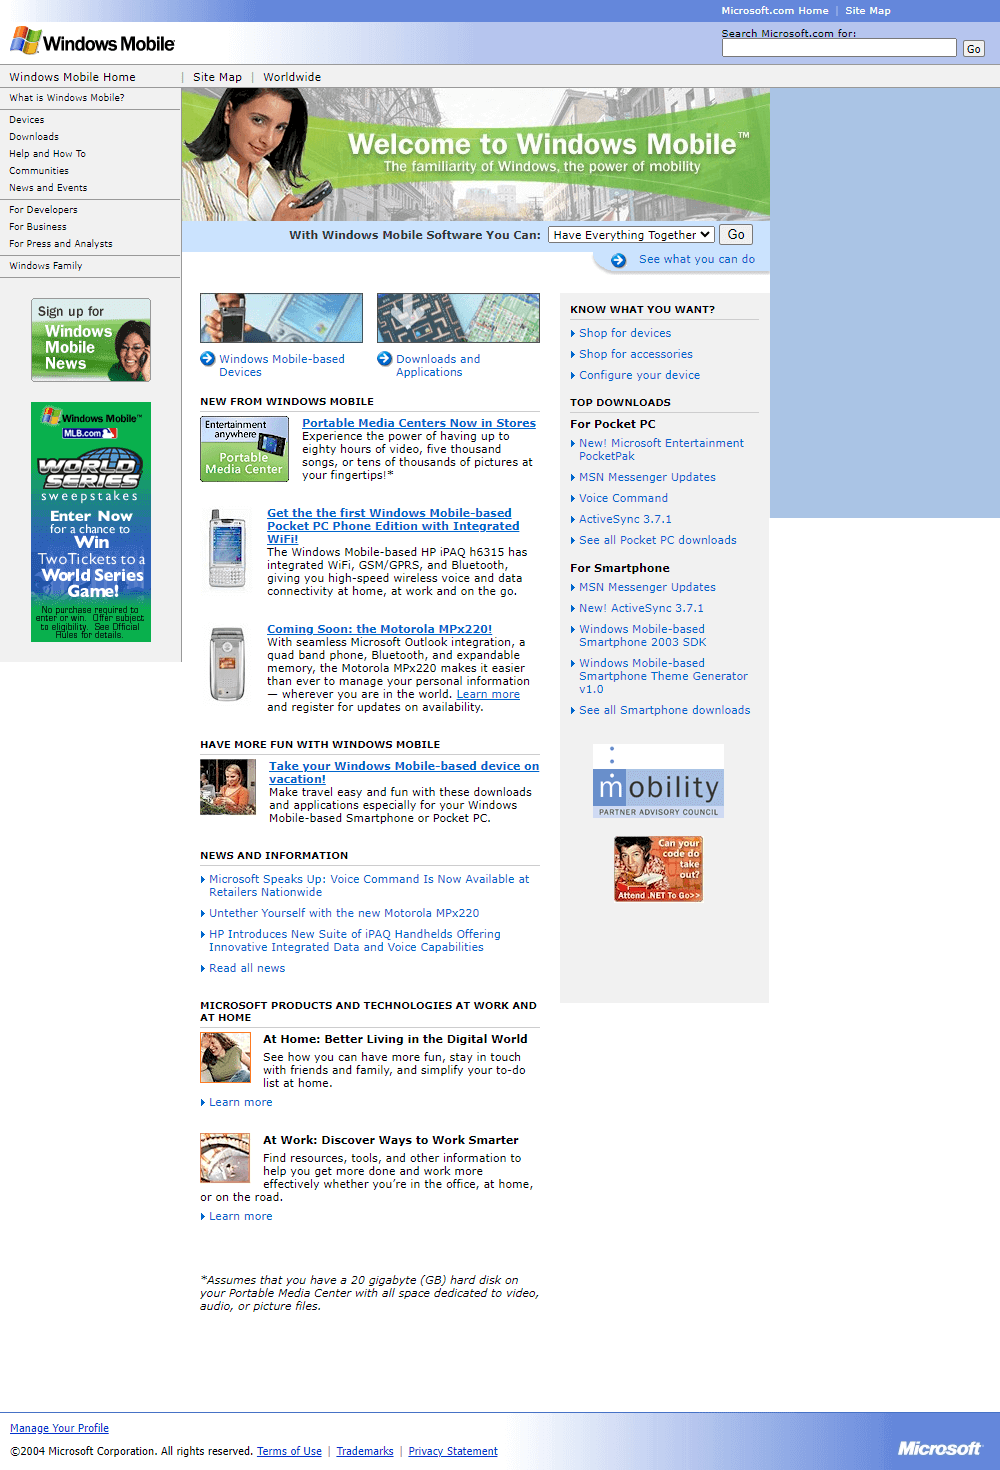 Windows Mobile website in 2004